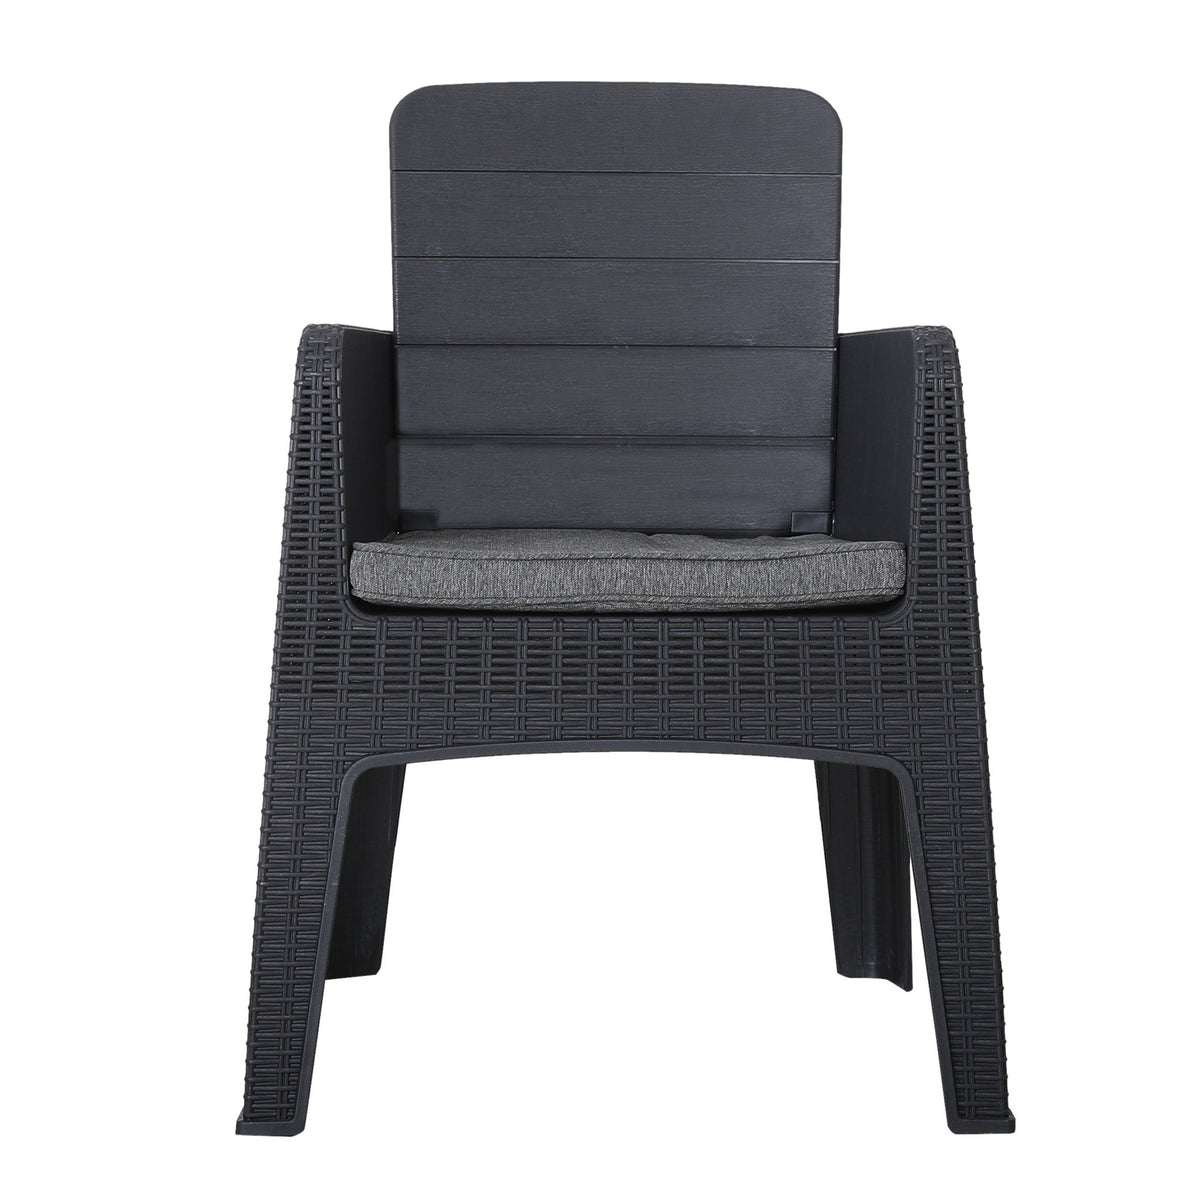 Faro Black 4 Seat Square Garden Dining Set Chair